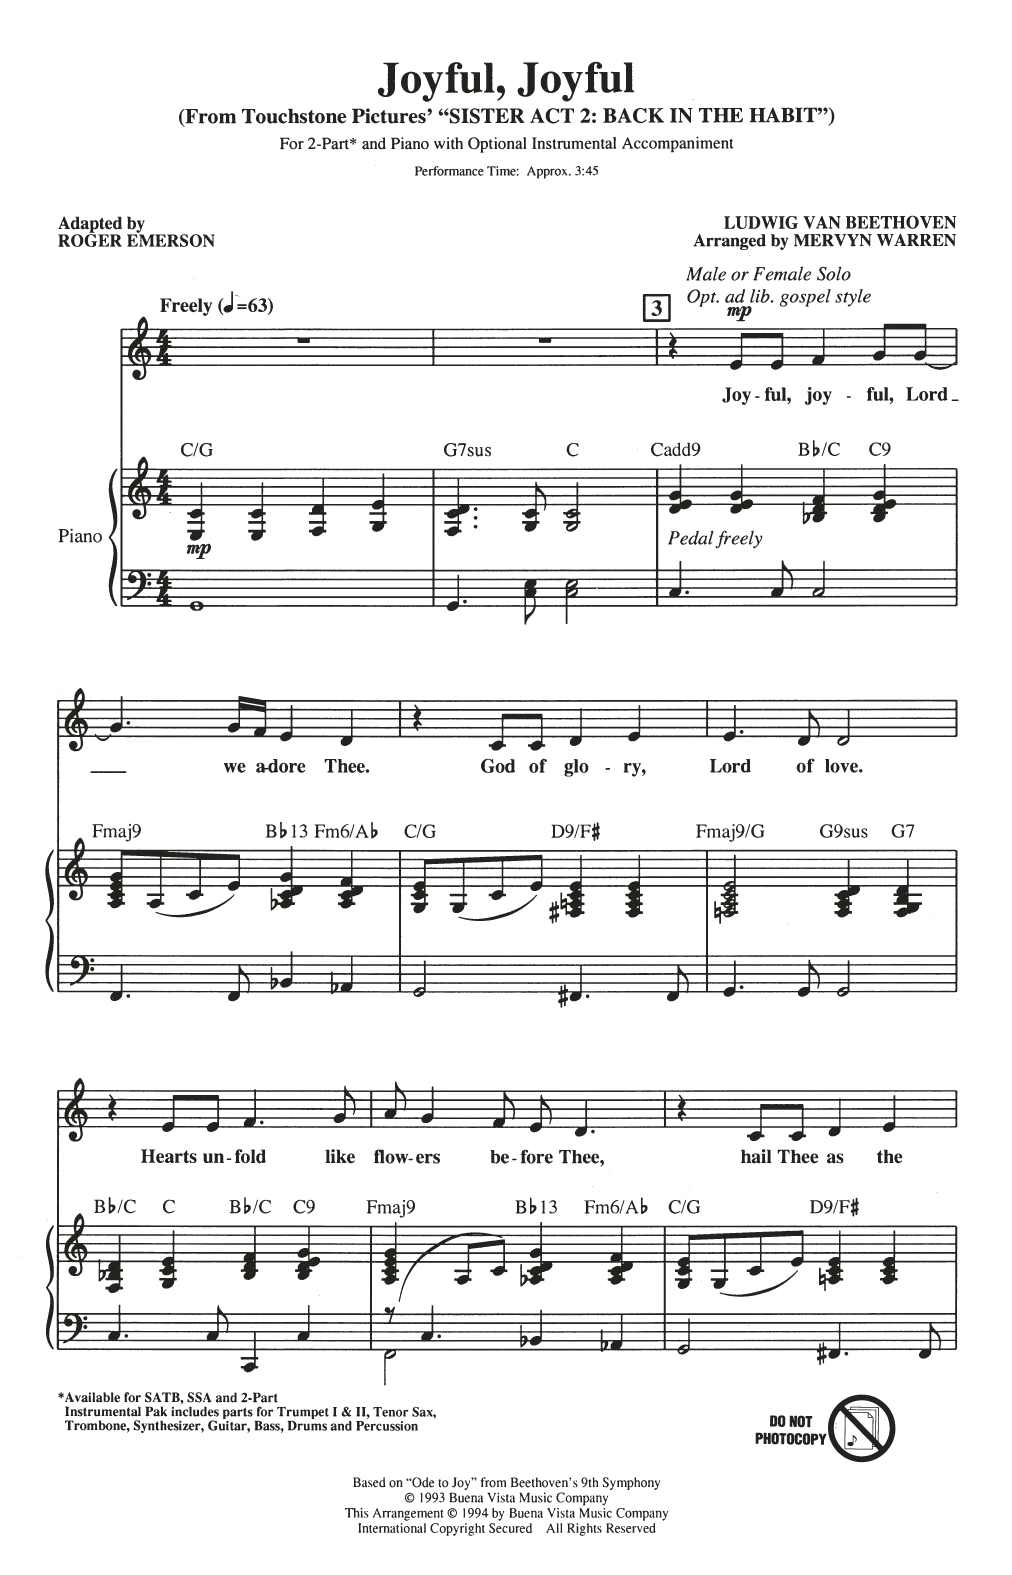 Download Mervyn Warren Joyful, Joyful (from Sister Act 2) (arr. Roger Emerson) Sheet Music and learn how to play 2-Part Choir PDF digital score in minutes